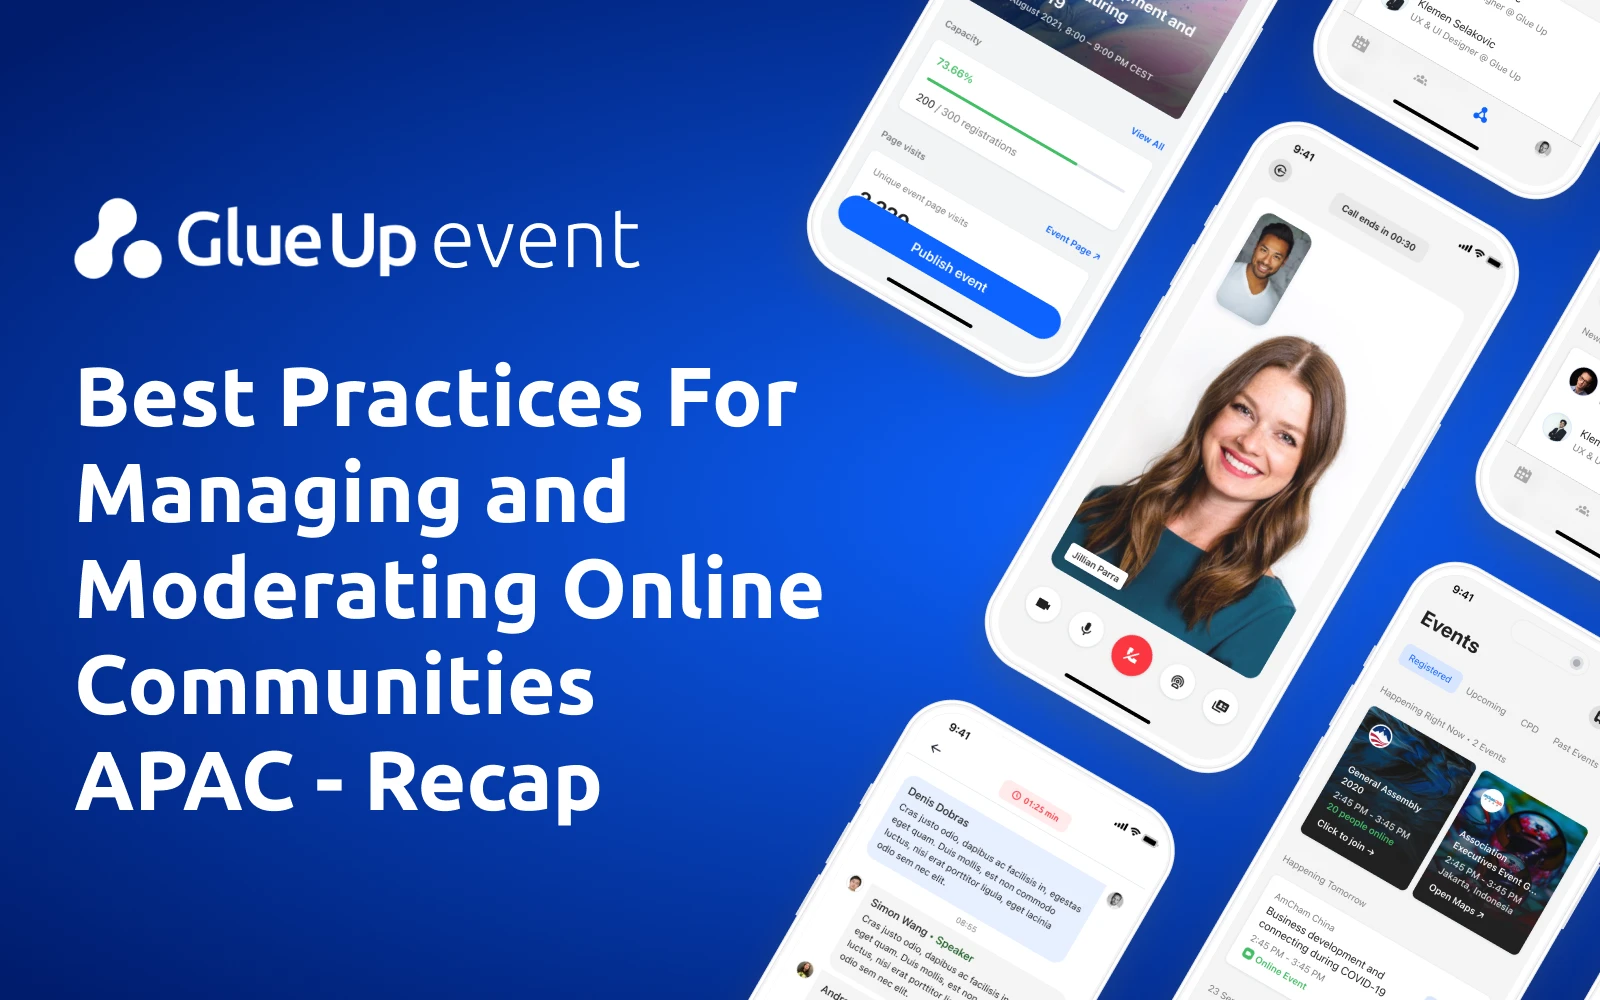 Event Best Practices For Managing and Moderating Online Communities APAC - RecapEvent Best Practices For Managing and Moderating Online Communities APAC - Recap